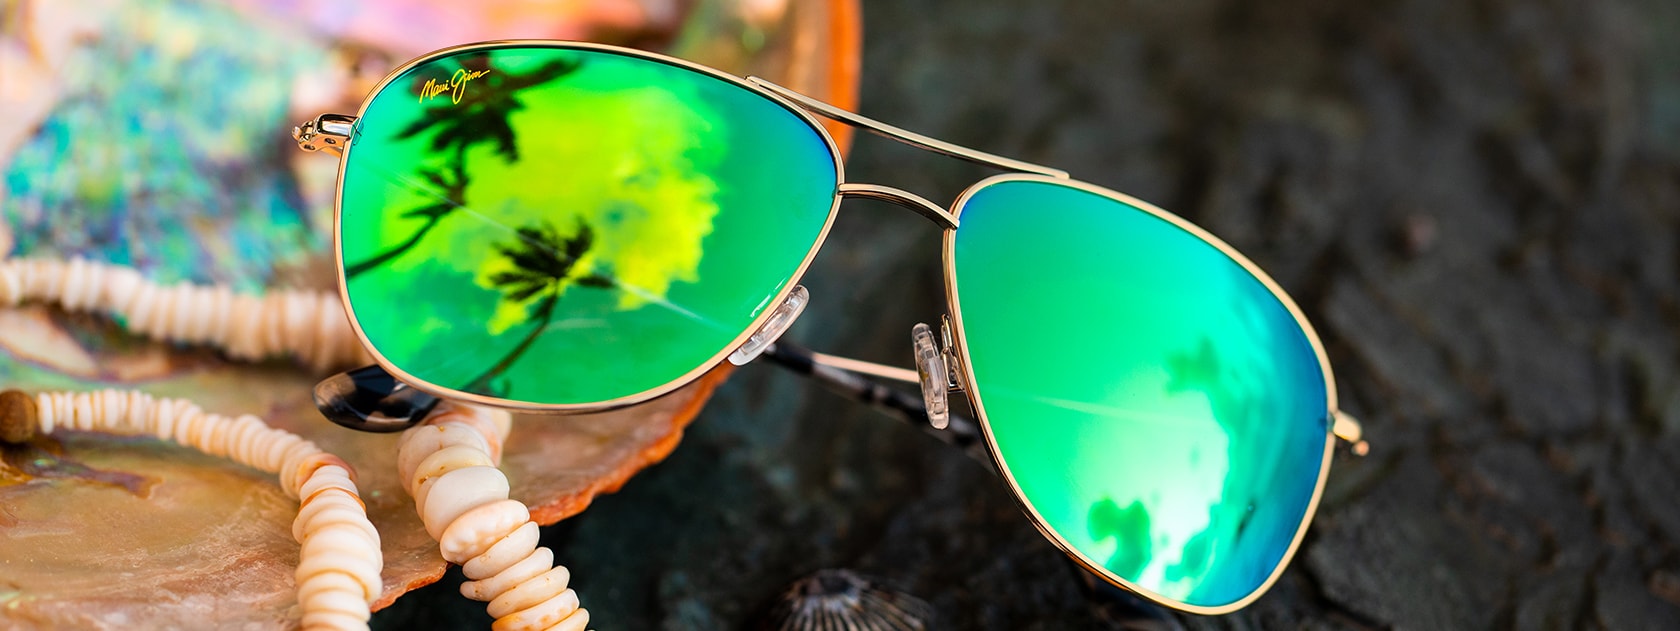 Custom Polarized Sunglasses by Maui Jim - MyMaui